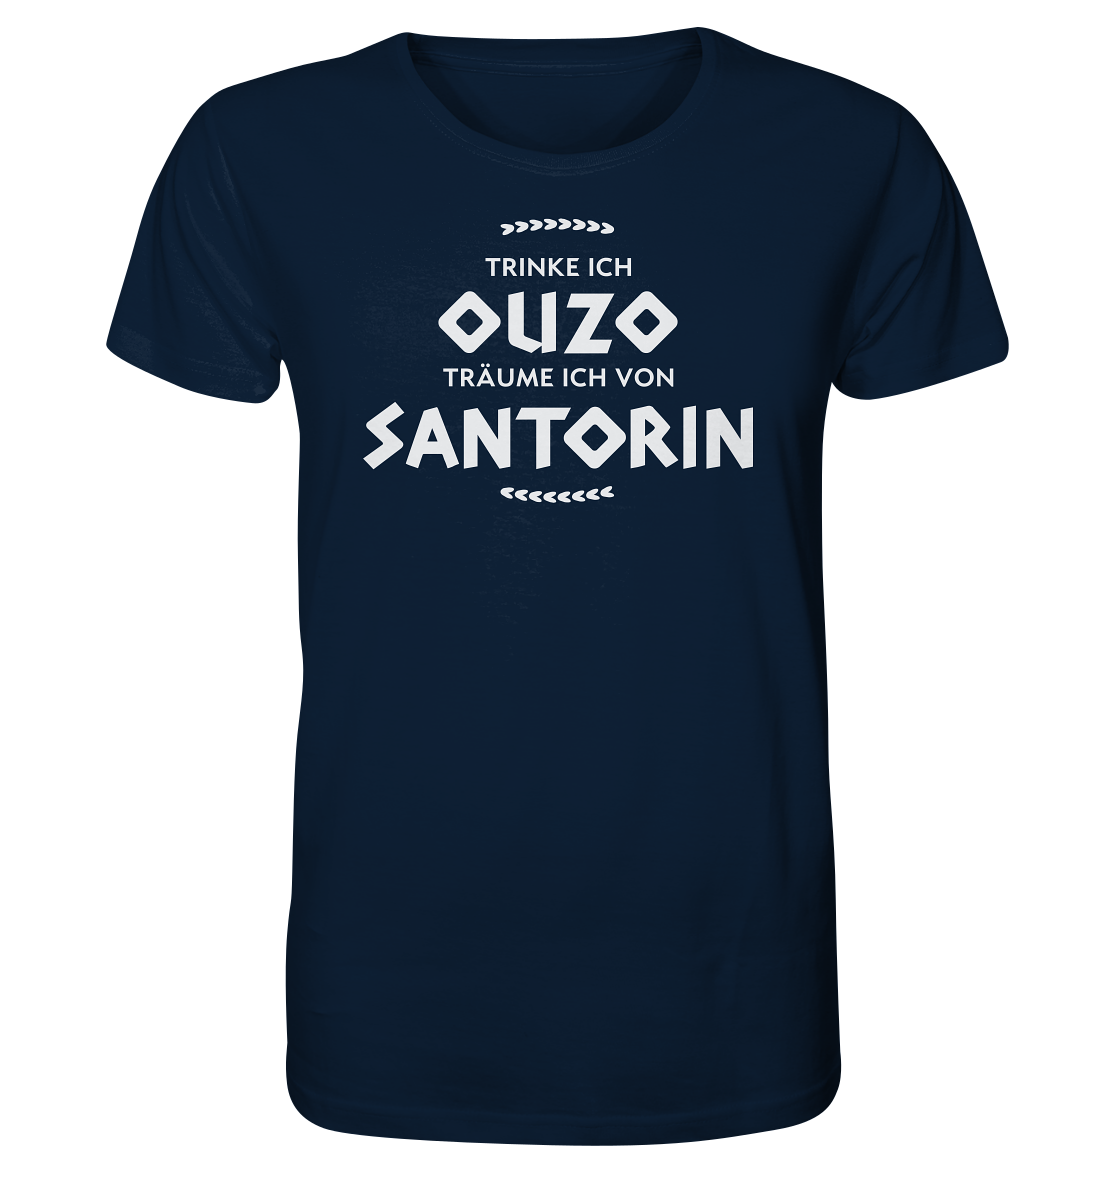 When I drink Ouzo I dream of Santorini - Organic Shirt